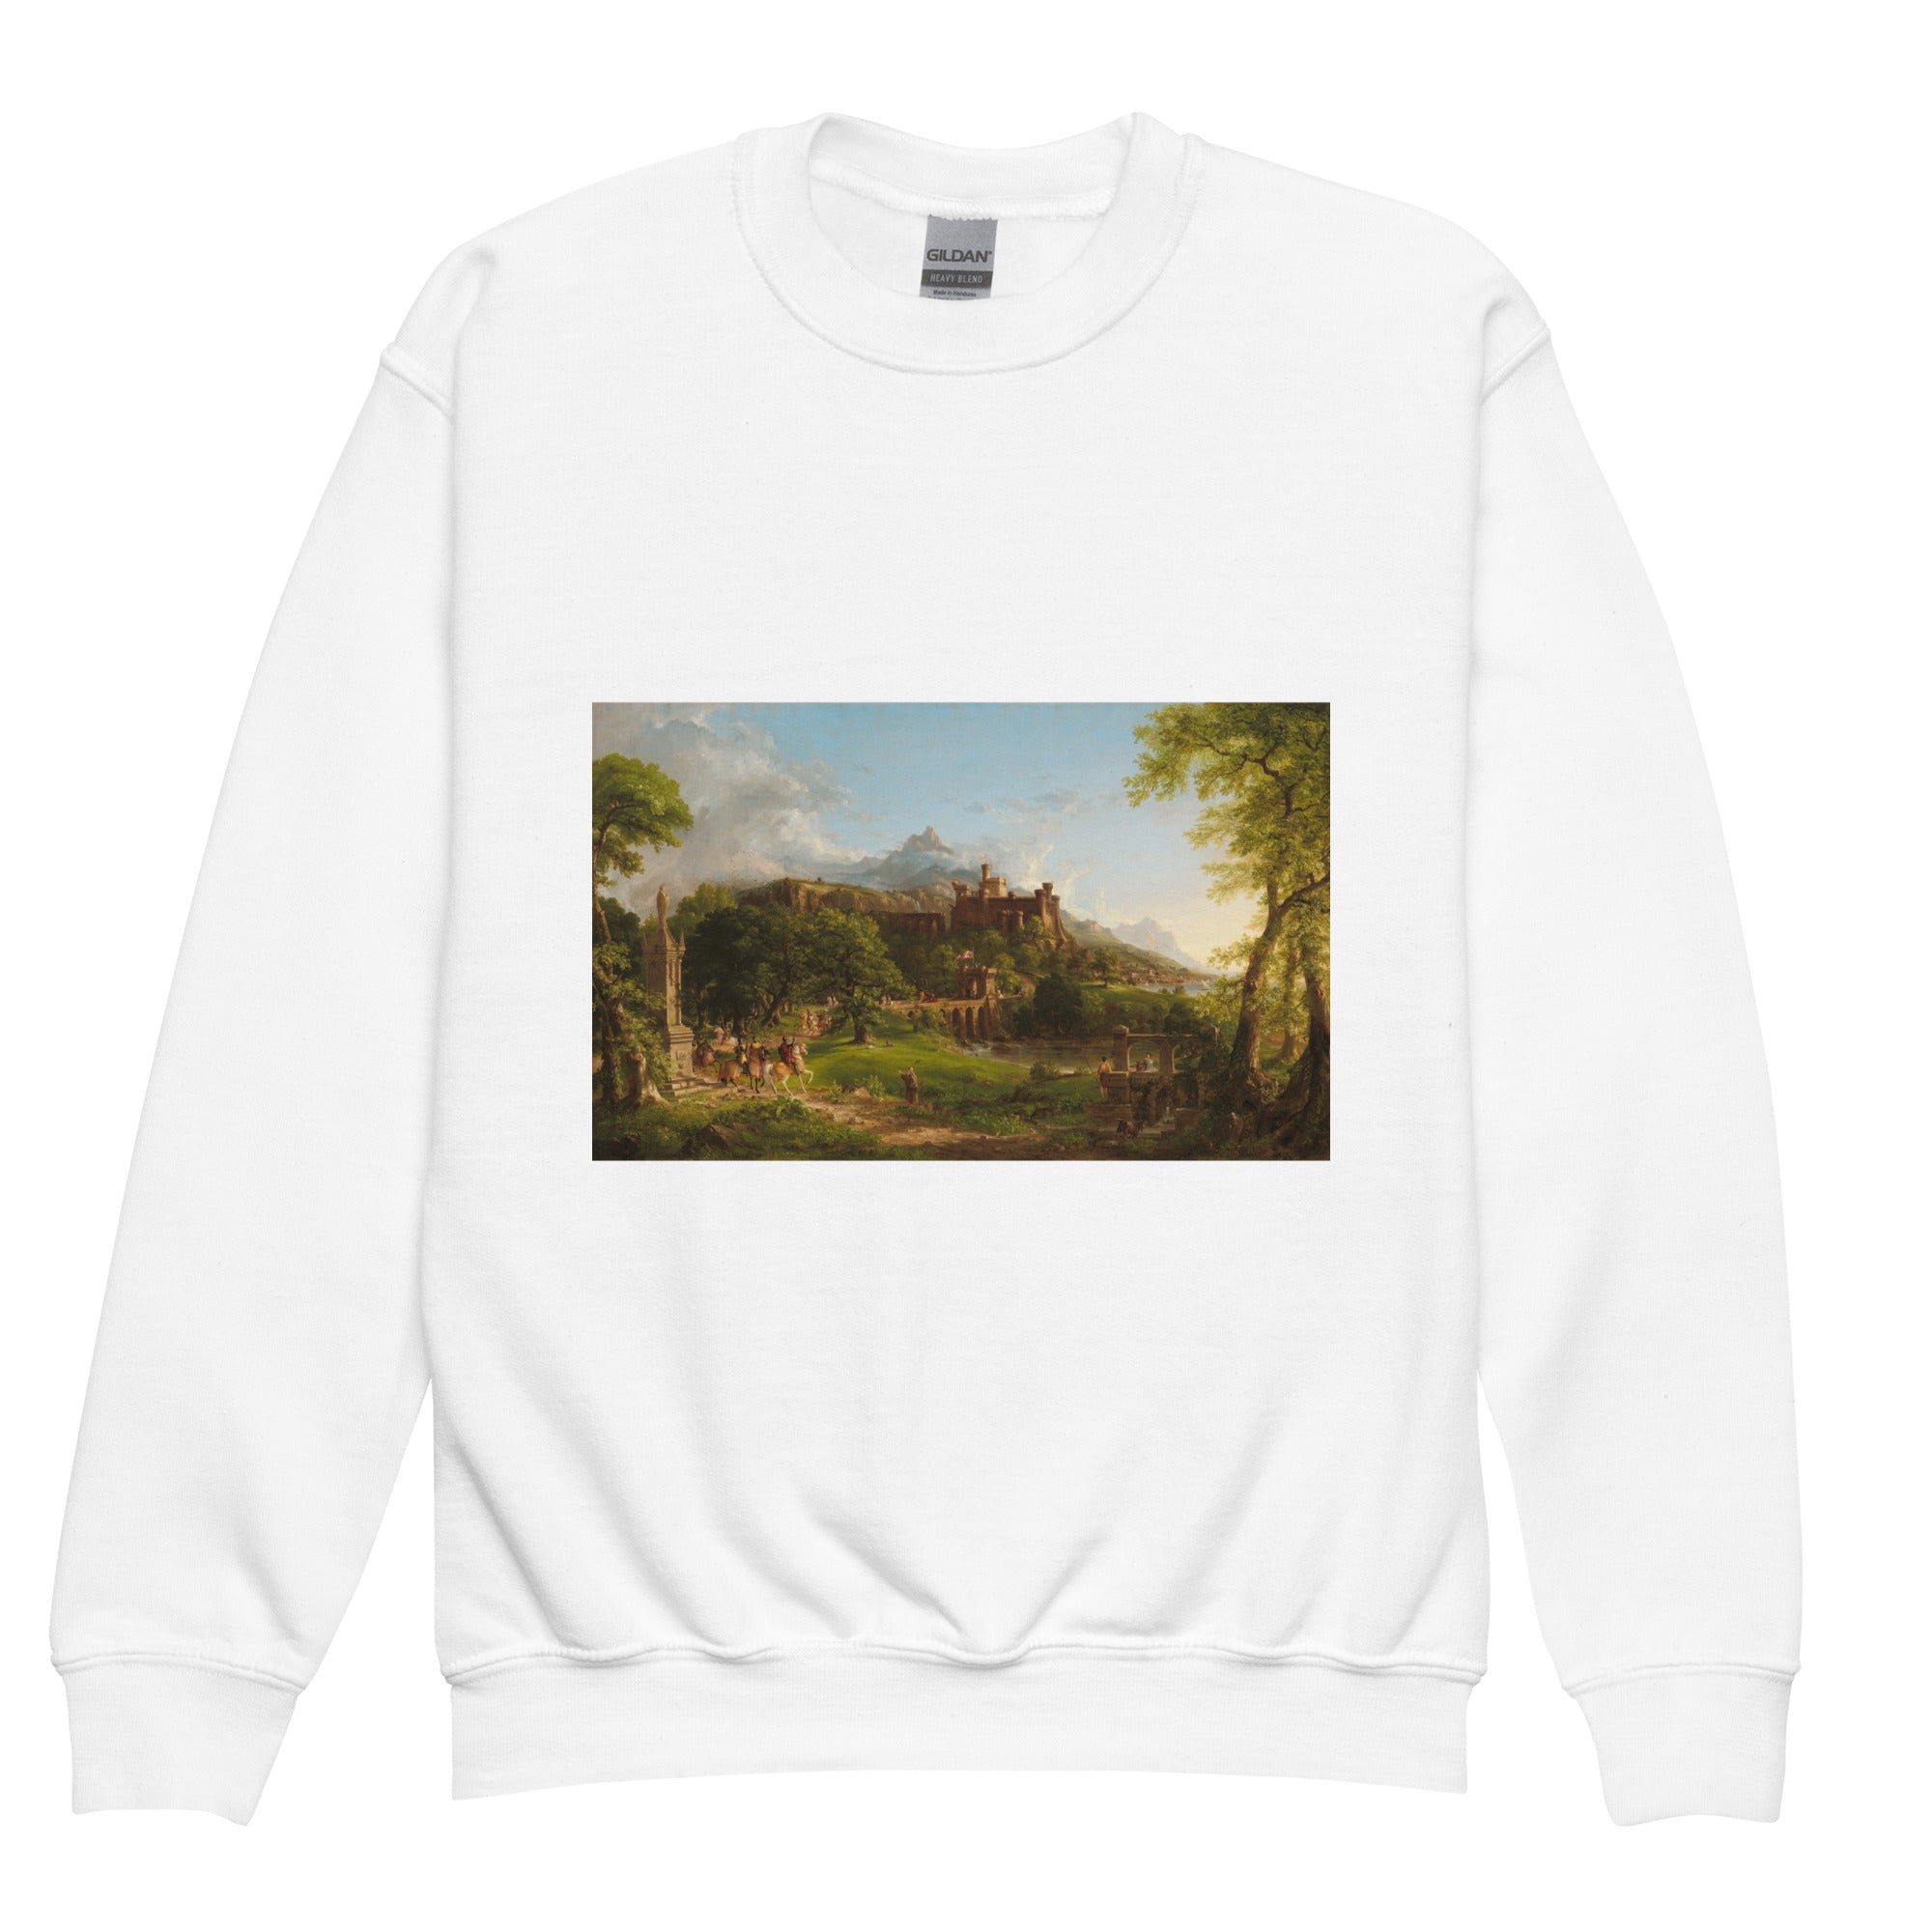 Thomas Cole 'The Departure' Famous Painting Crewneck Sweatshirt | Premium Youth Art Sweatshirt